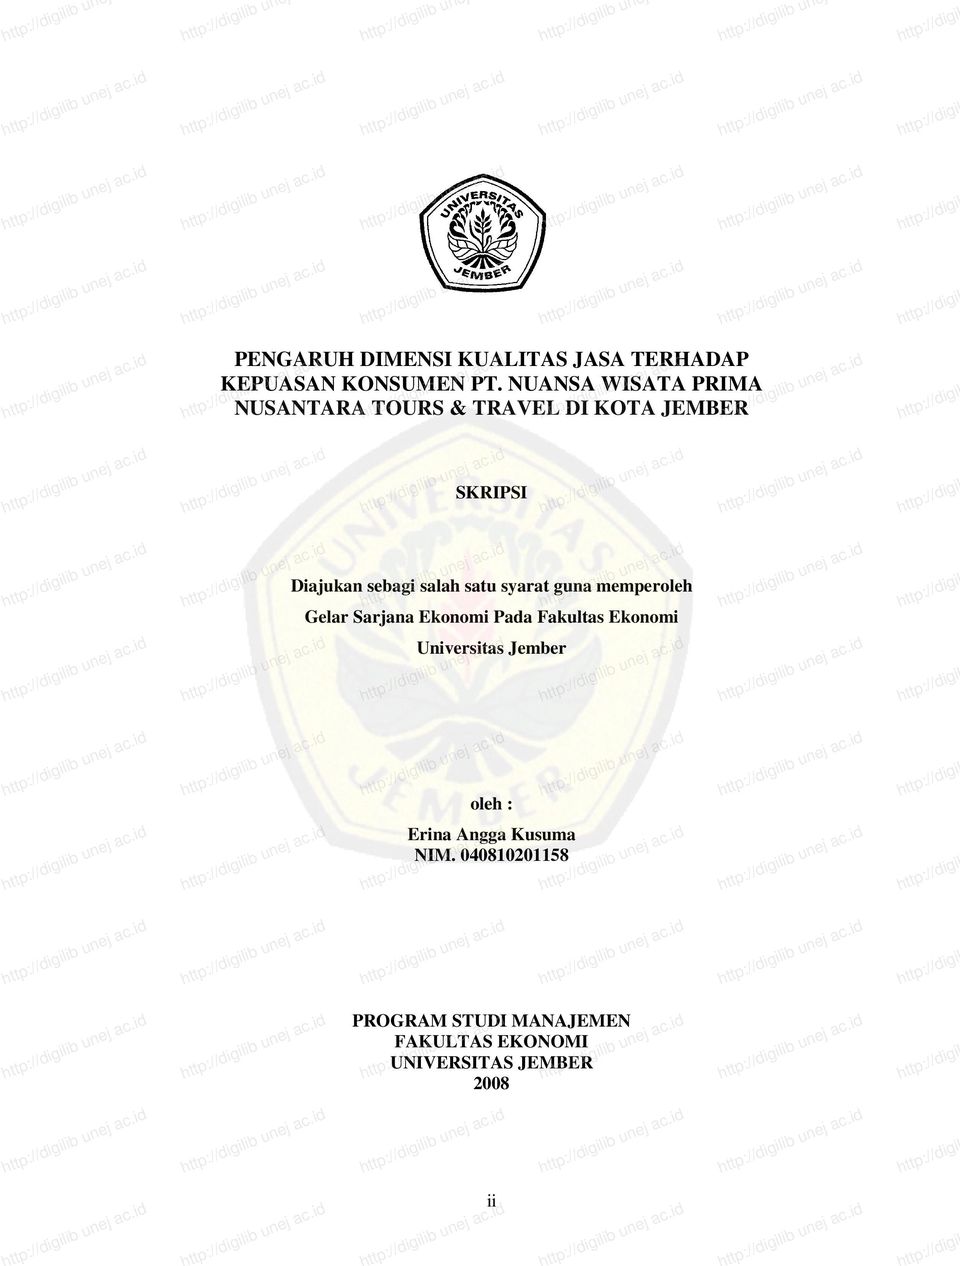 syarat guna memperoleh Gelar Sarjana Ekonomi Pada Fakultas Ekonomi Universitas Jember oleh : Erina